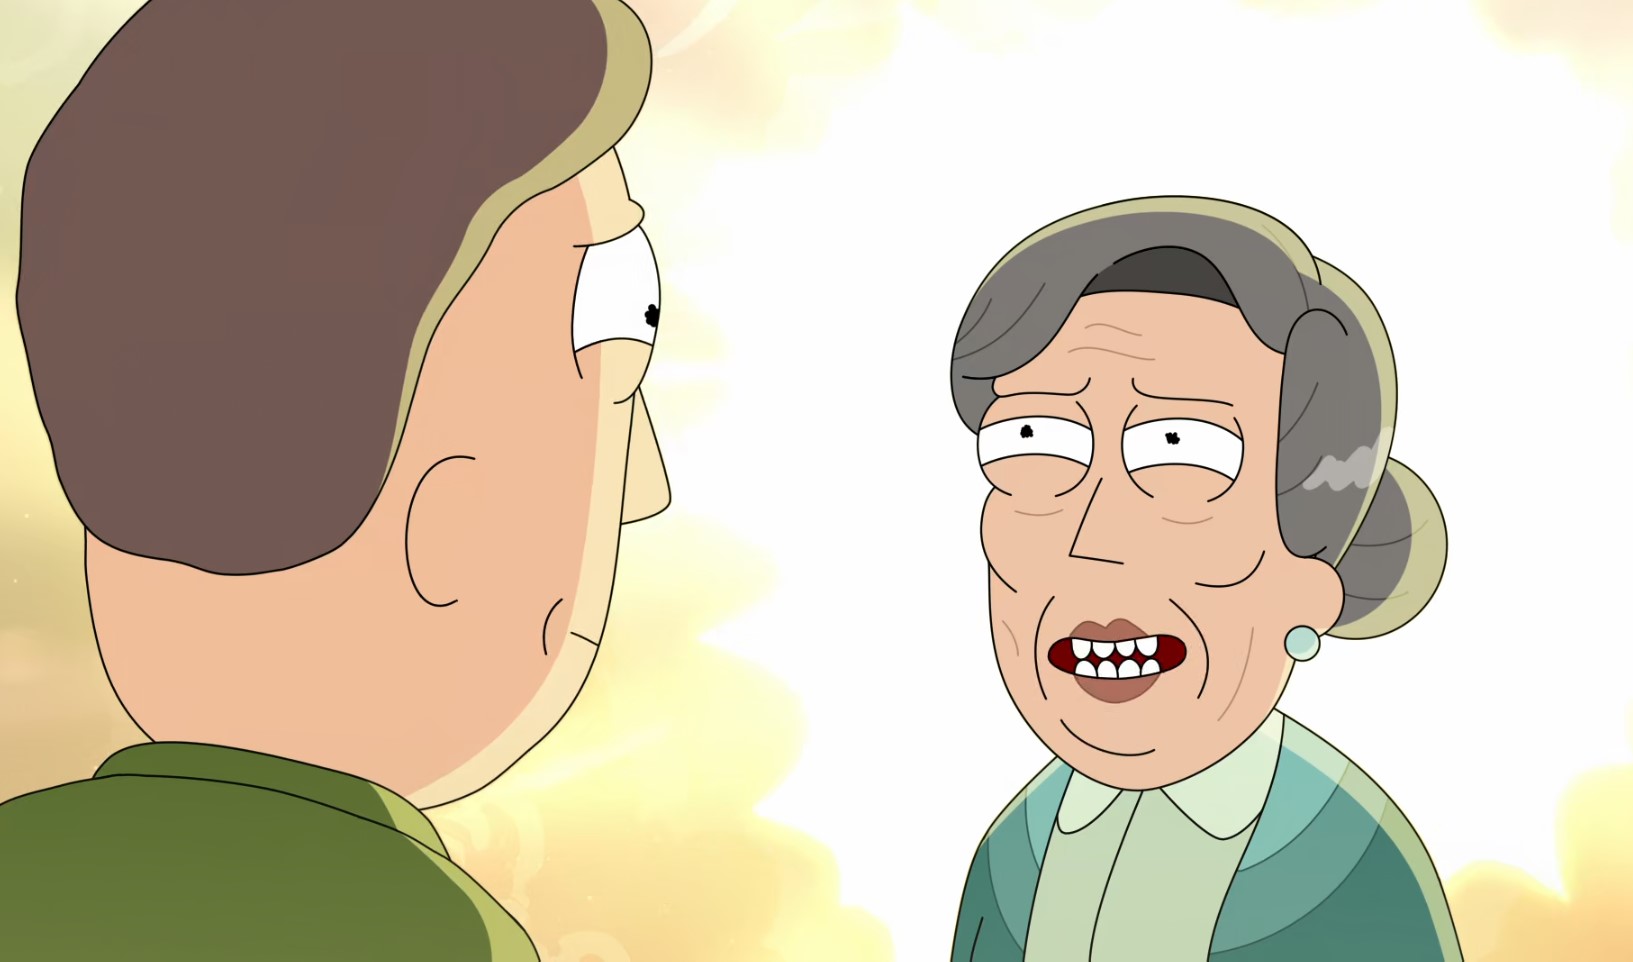 Rick and Morty Season 7 Episode 10